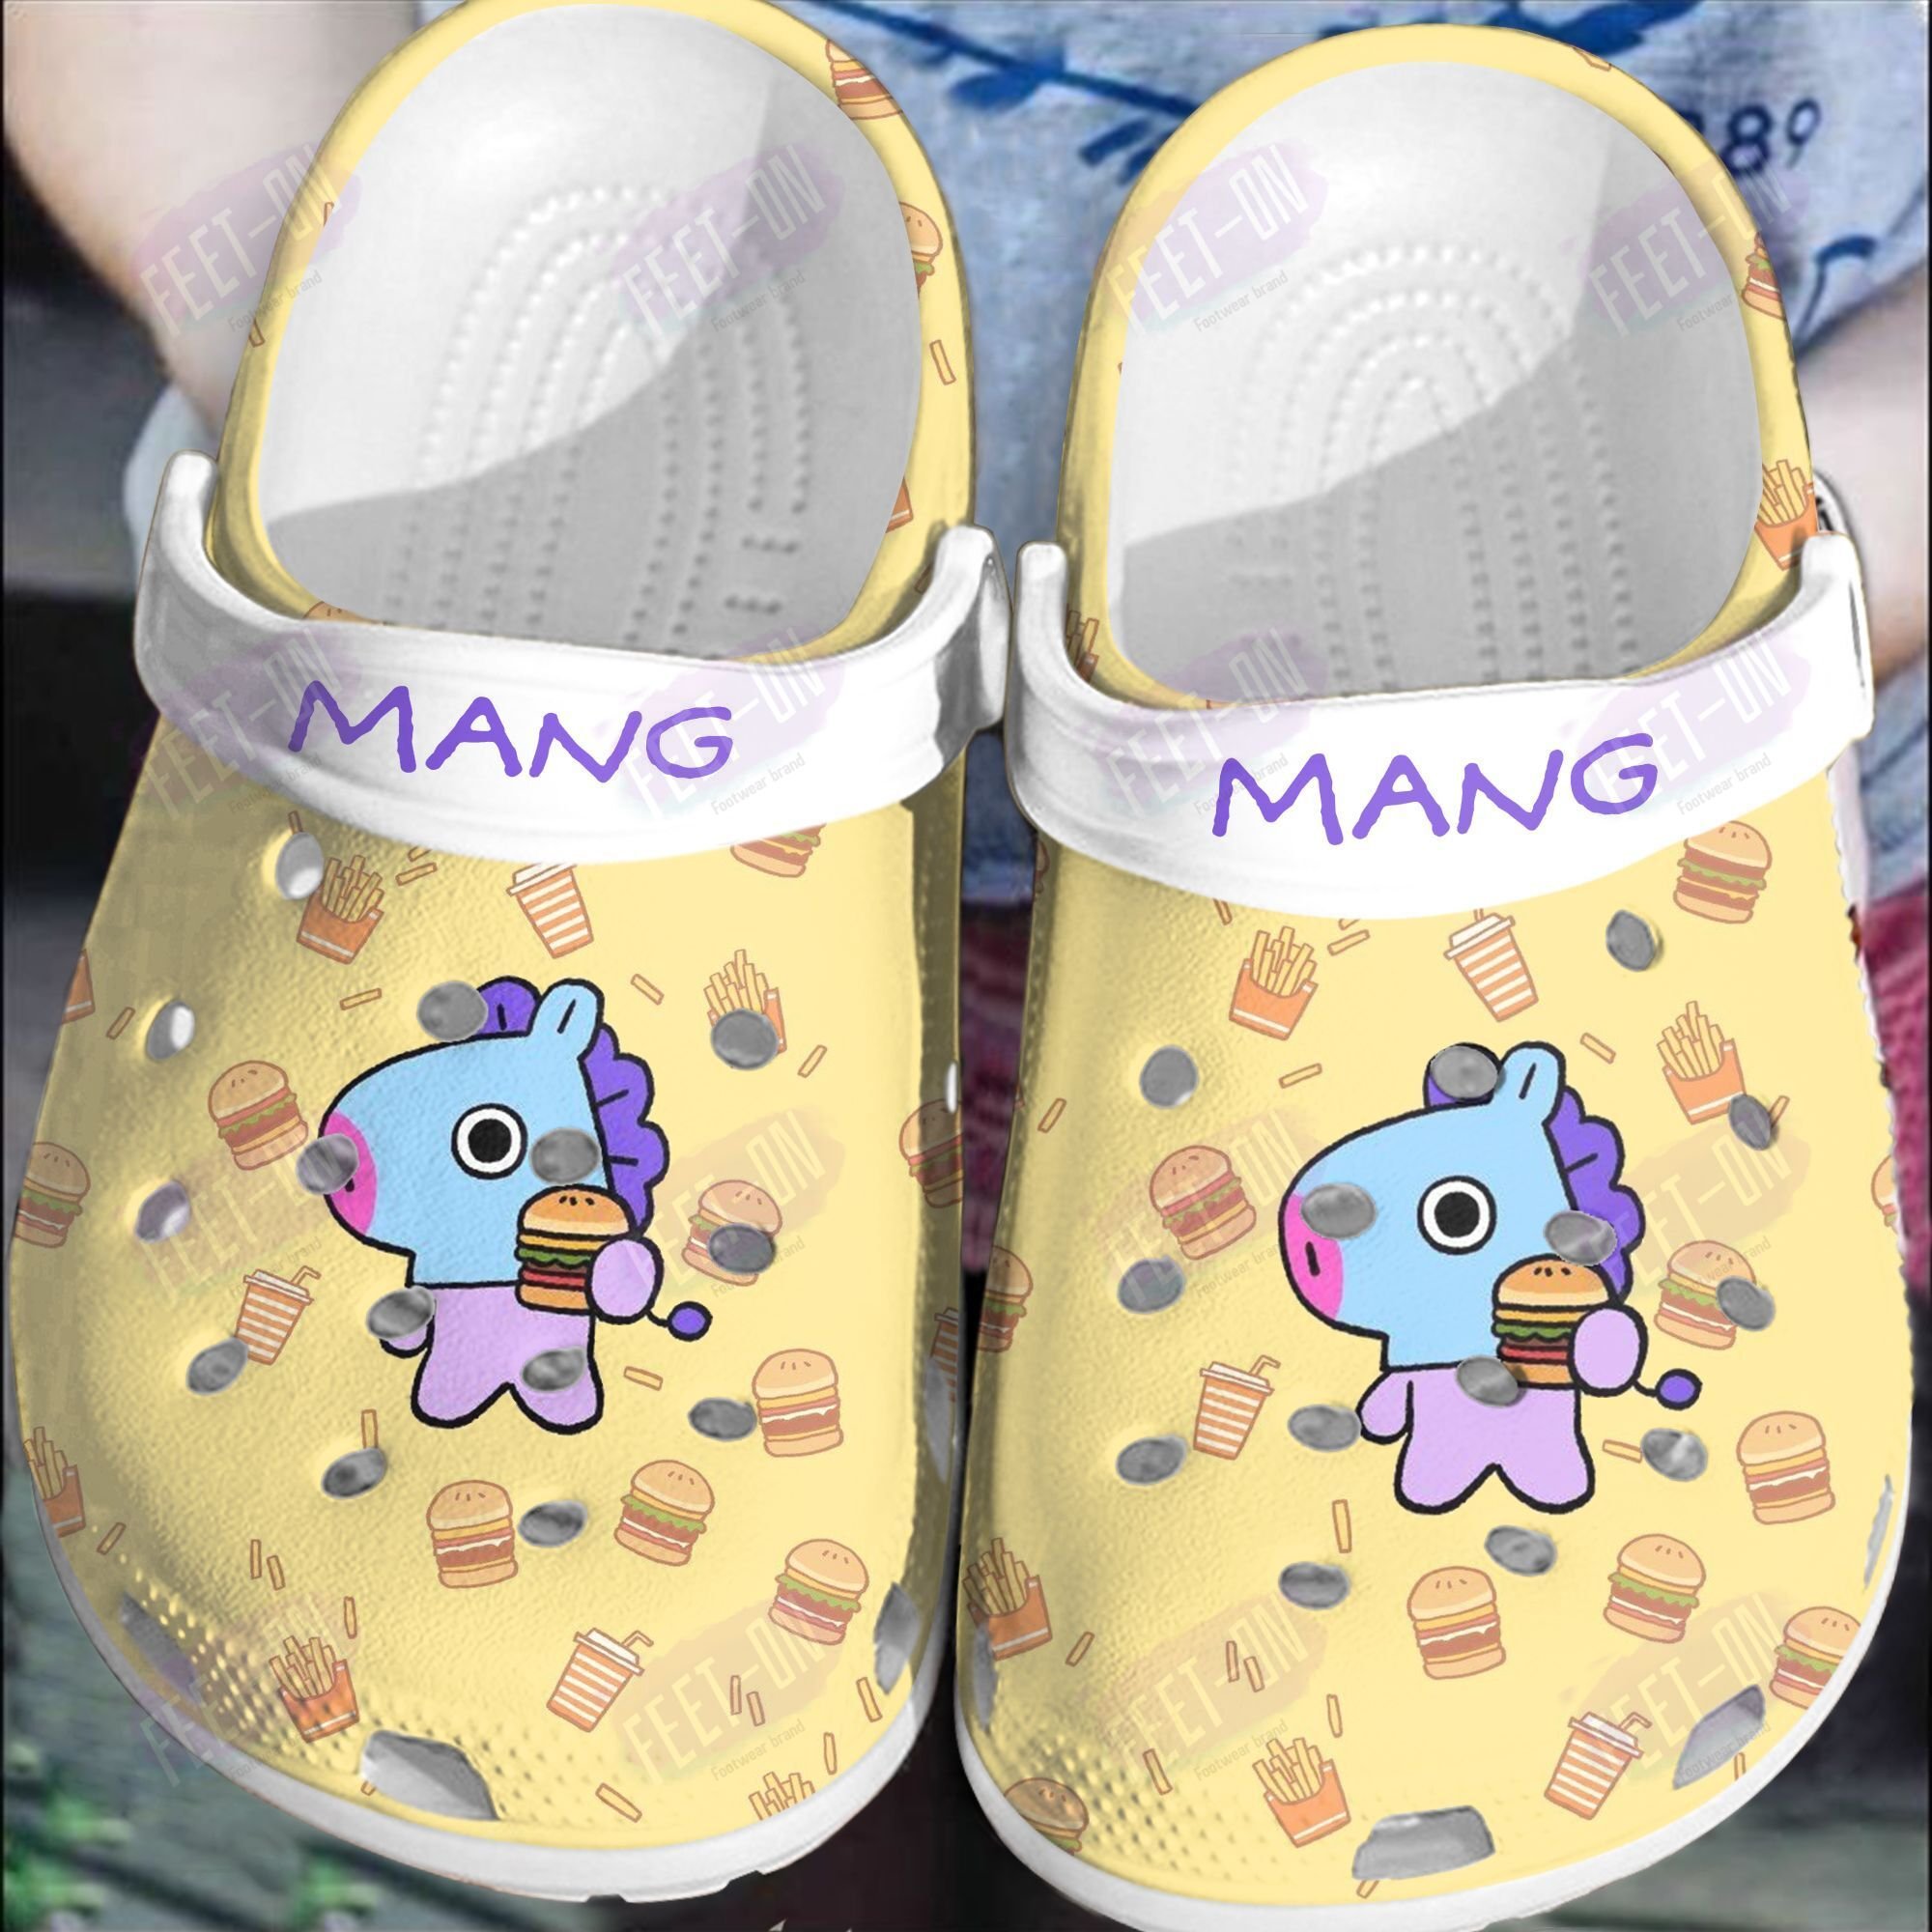 BEST Mang BT21 BTS crocs crocband Shoes